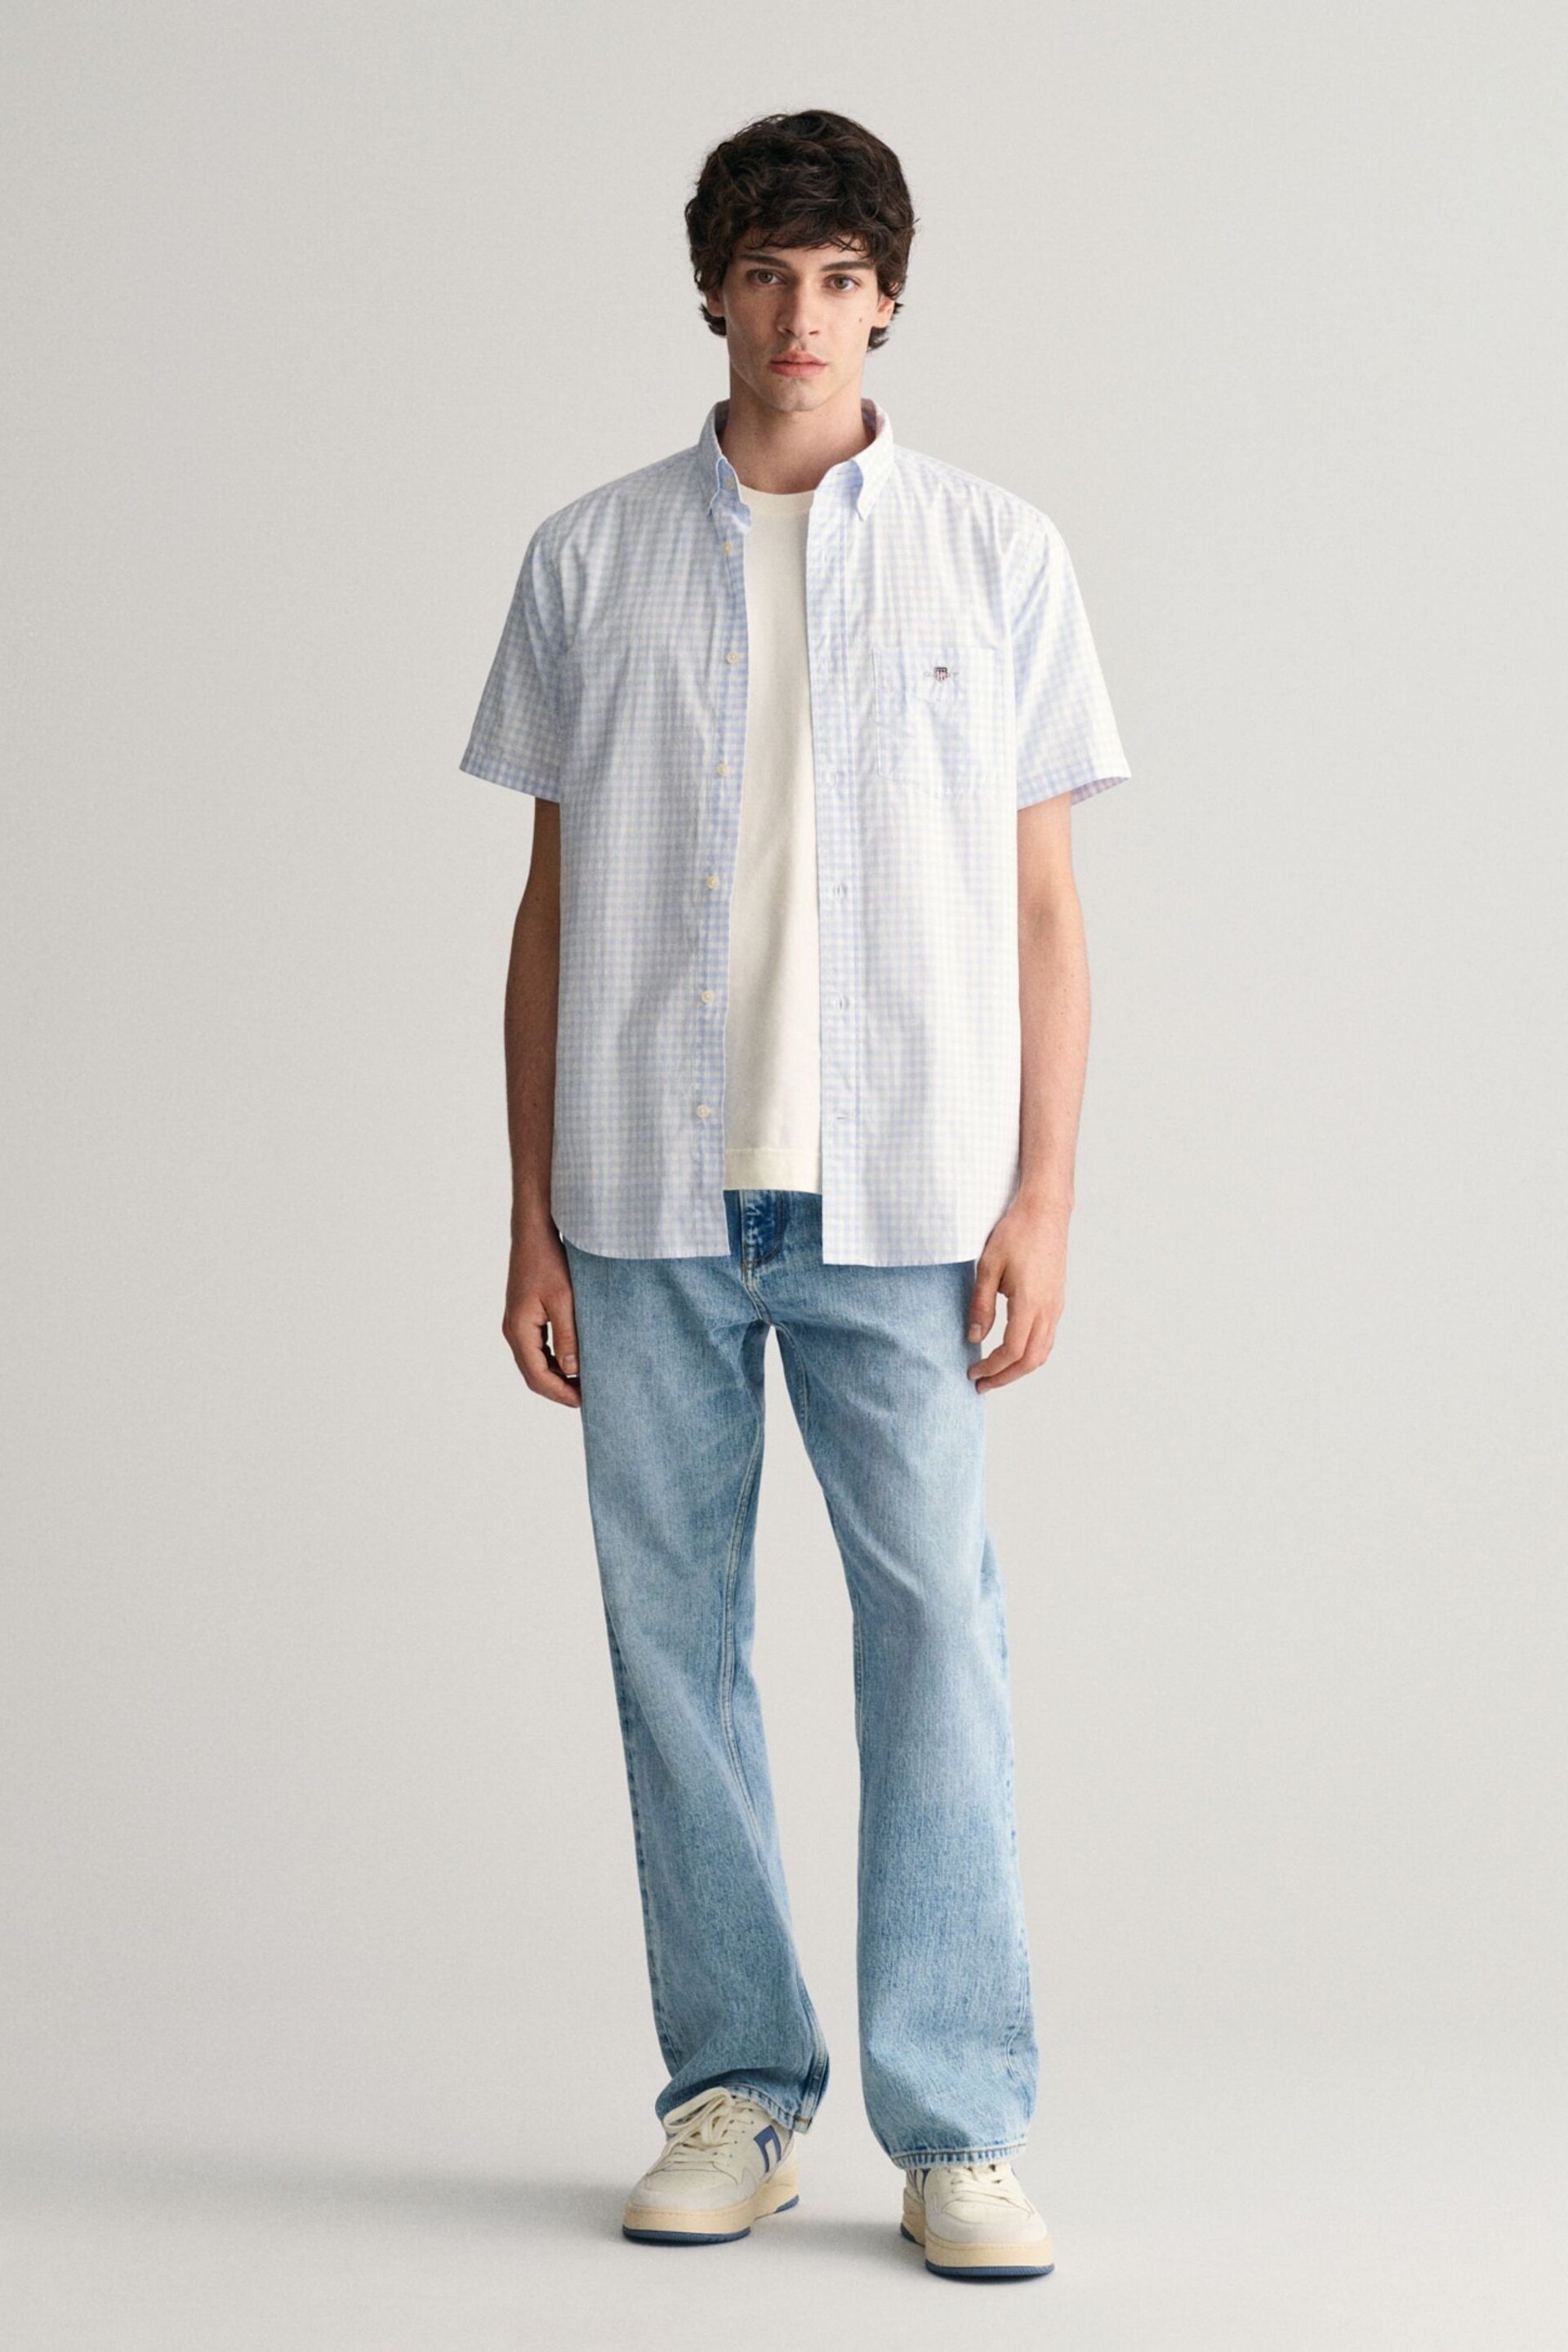 GANT Blue Regular Fit Gingham Poplin Short Sleeve Shirt - Image 3 of 5